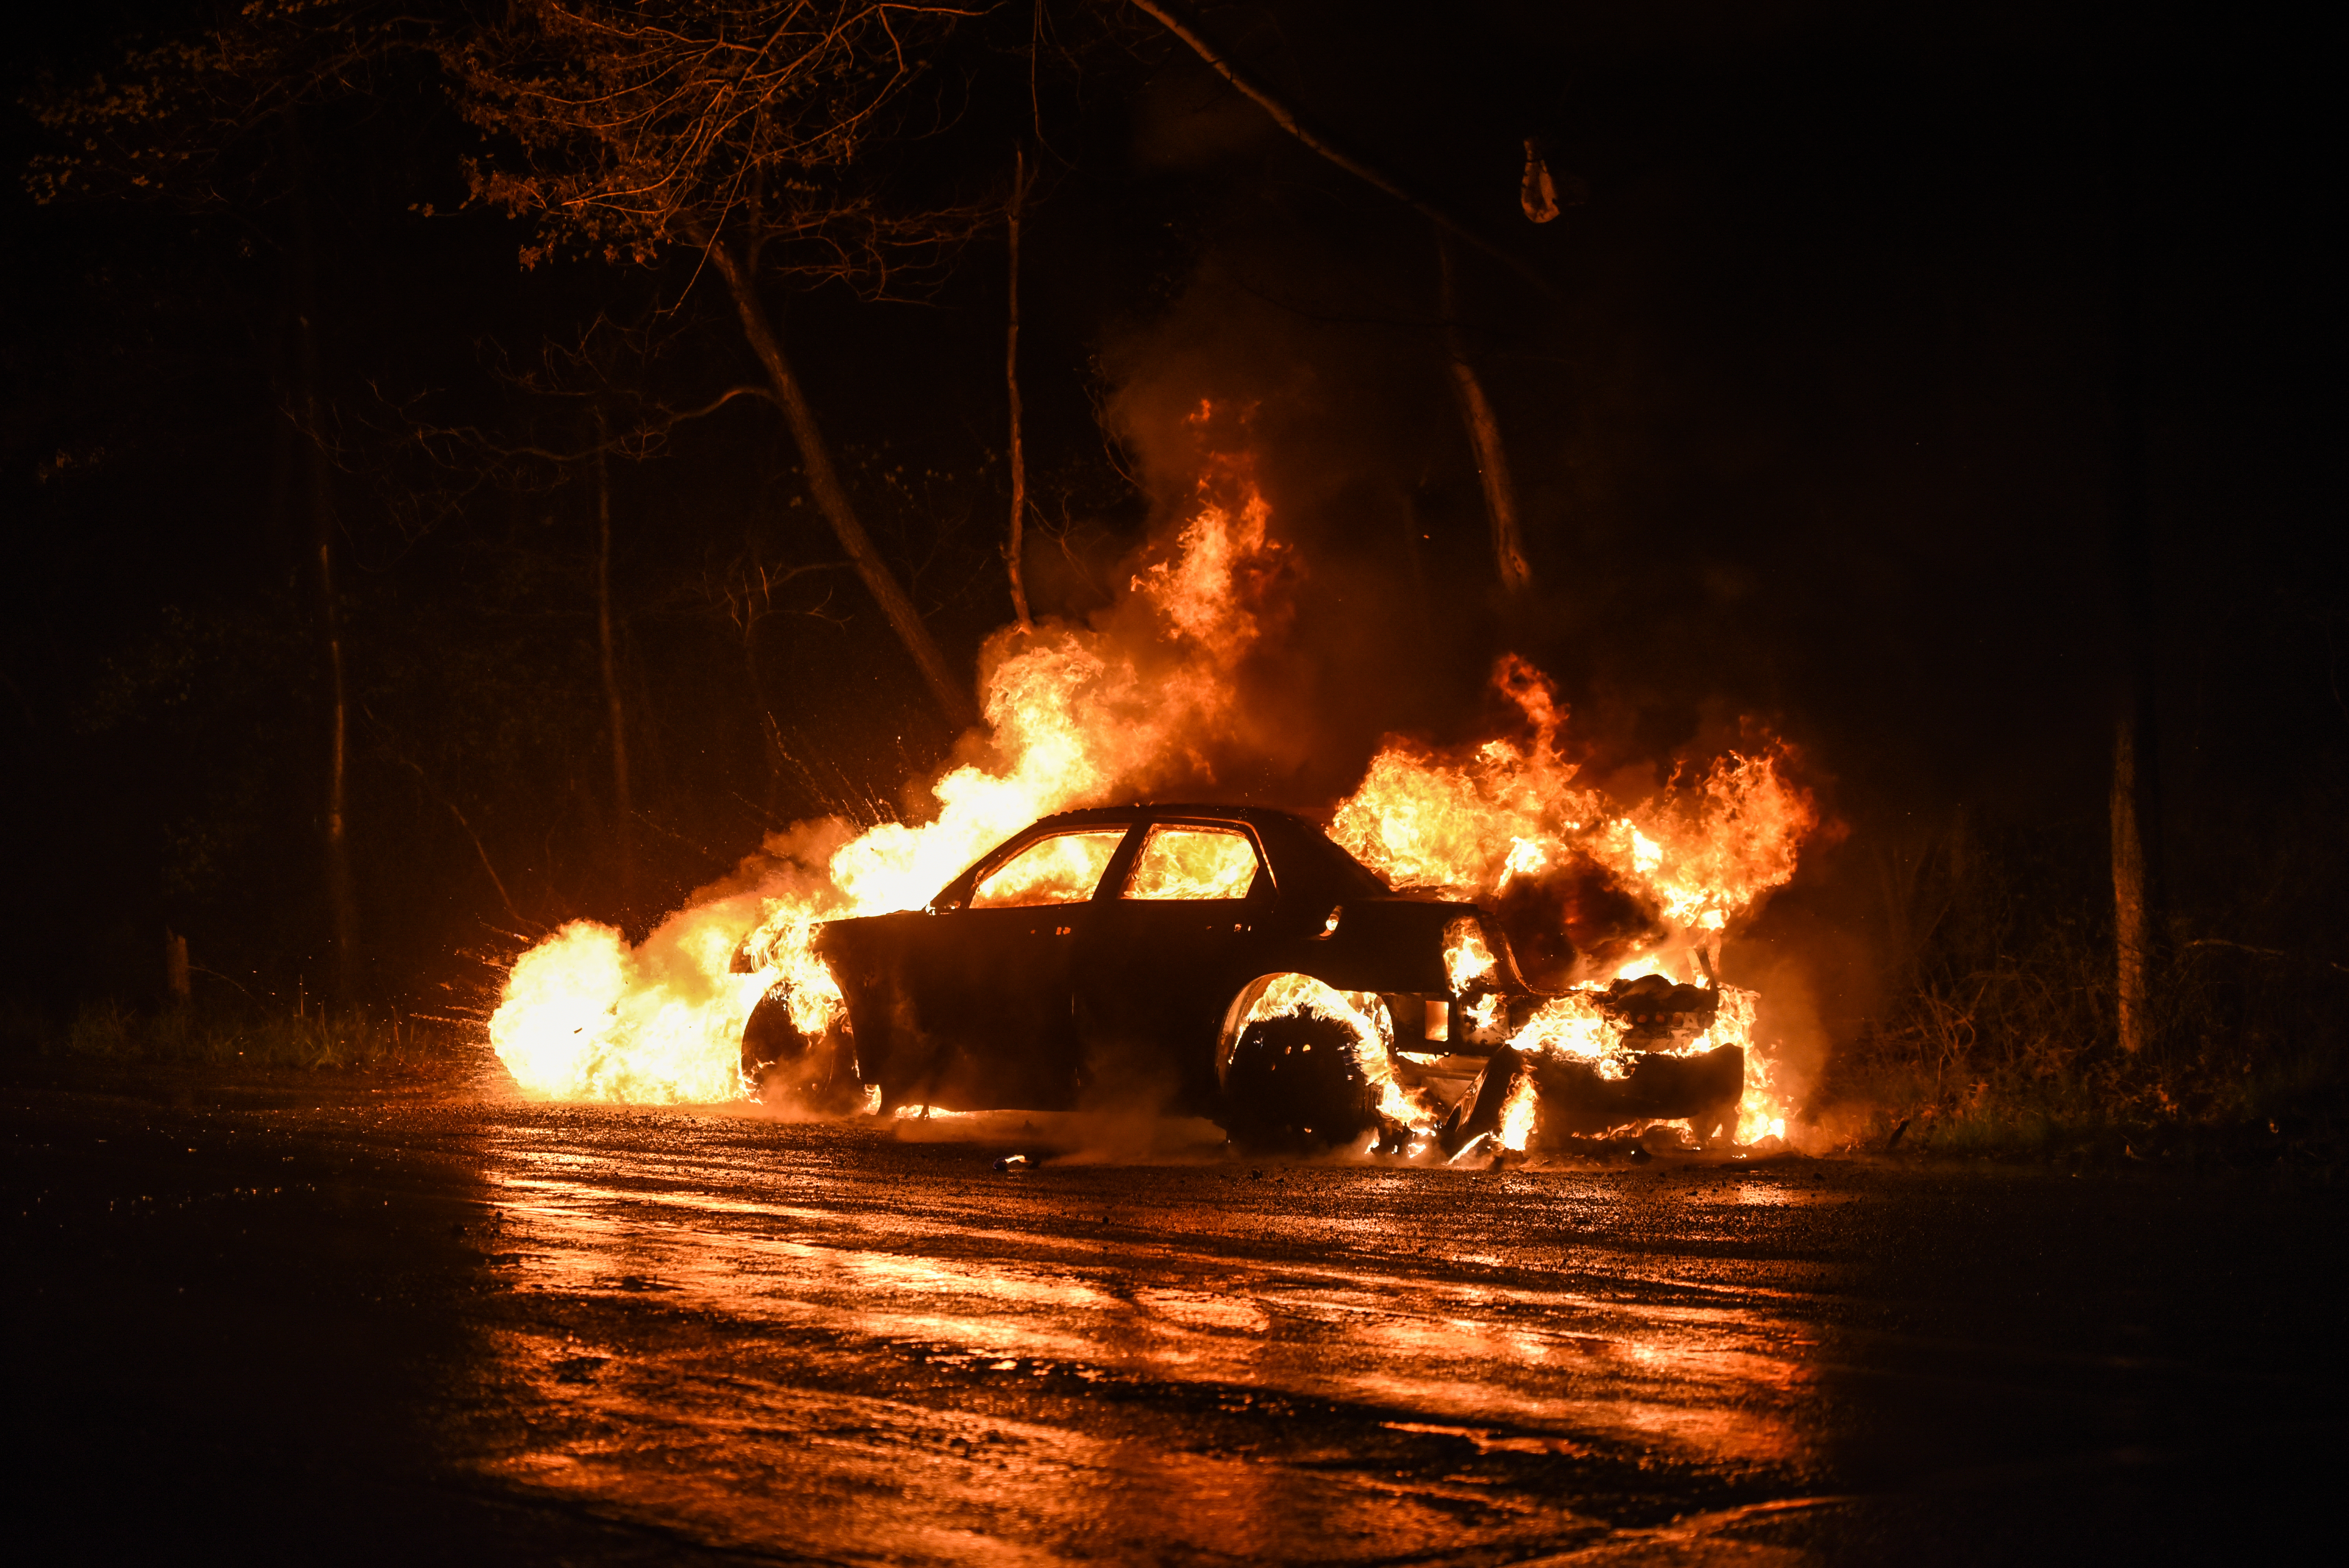 Burning car | Source: Shutterstock